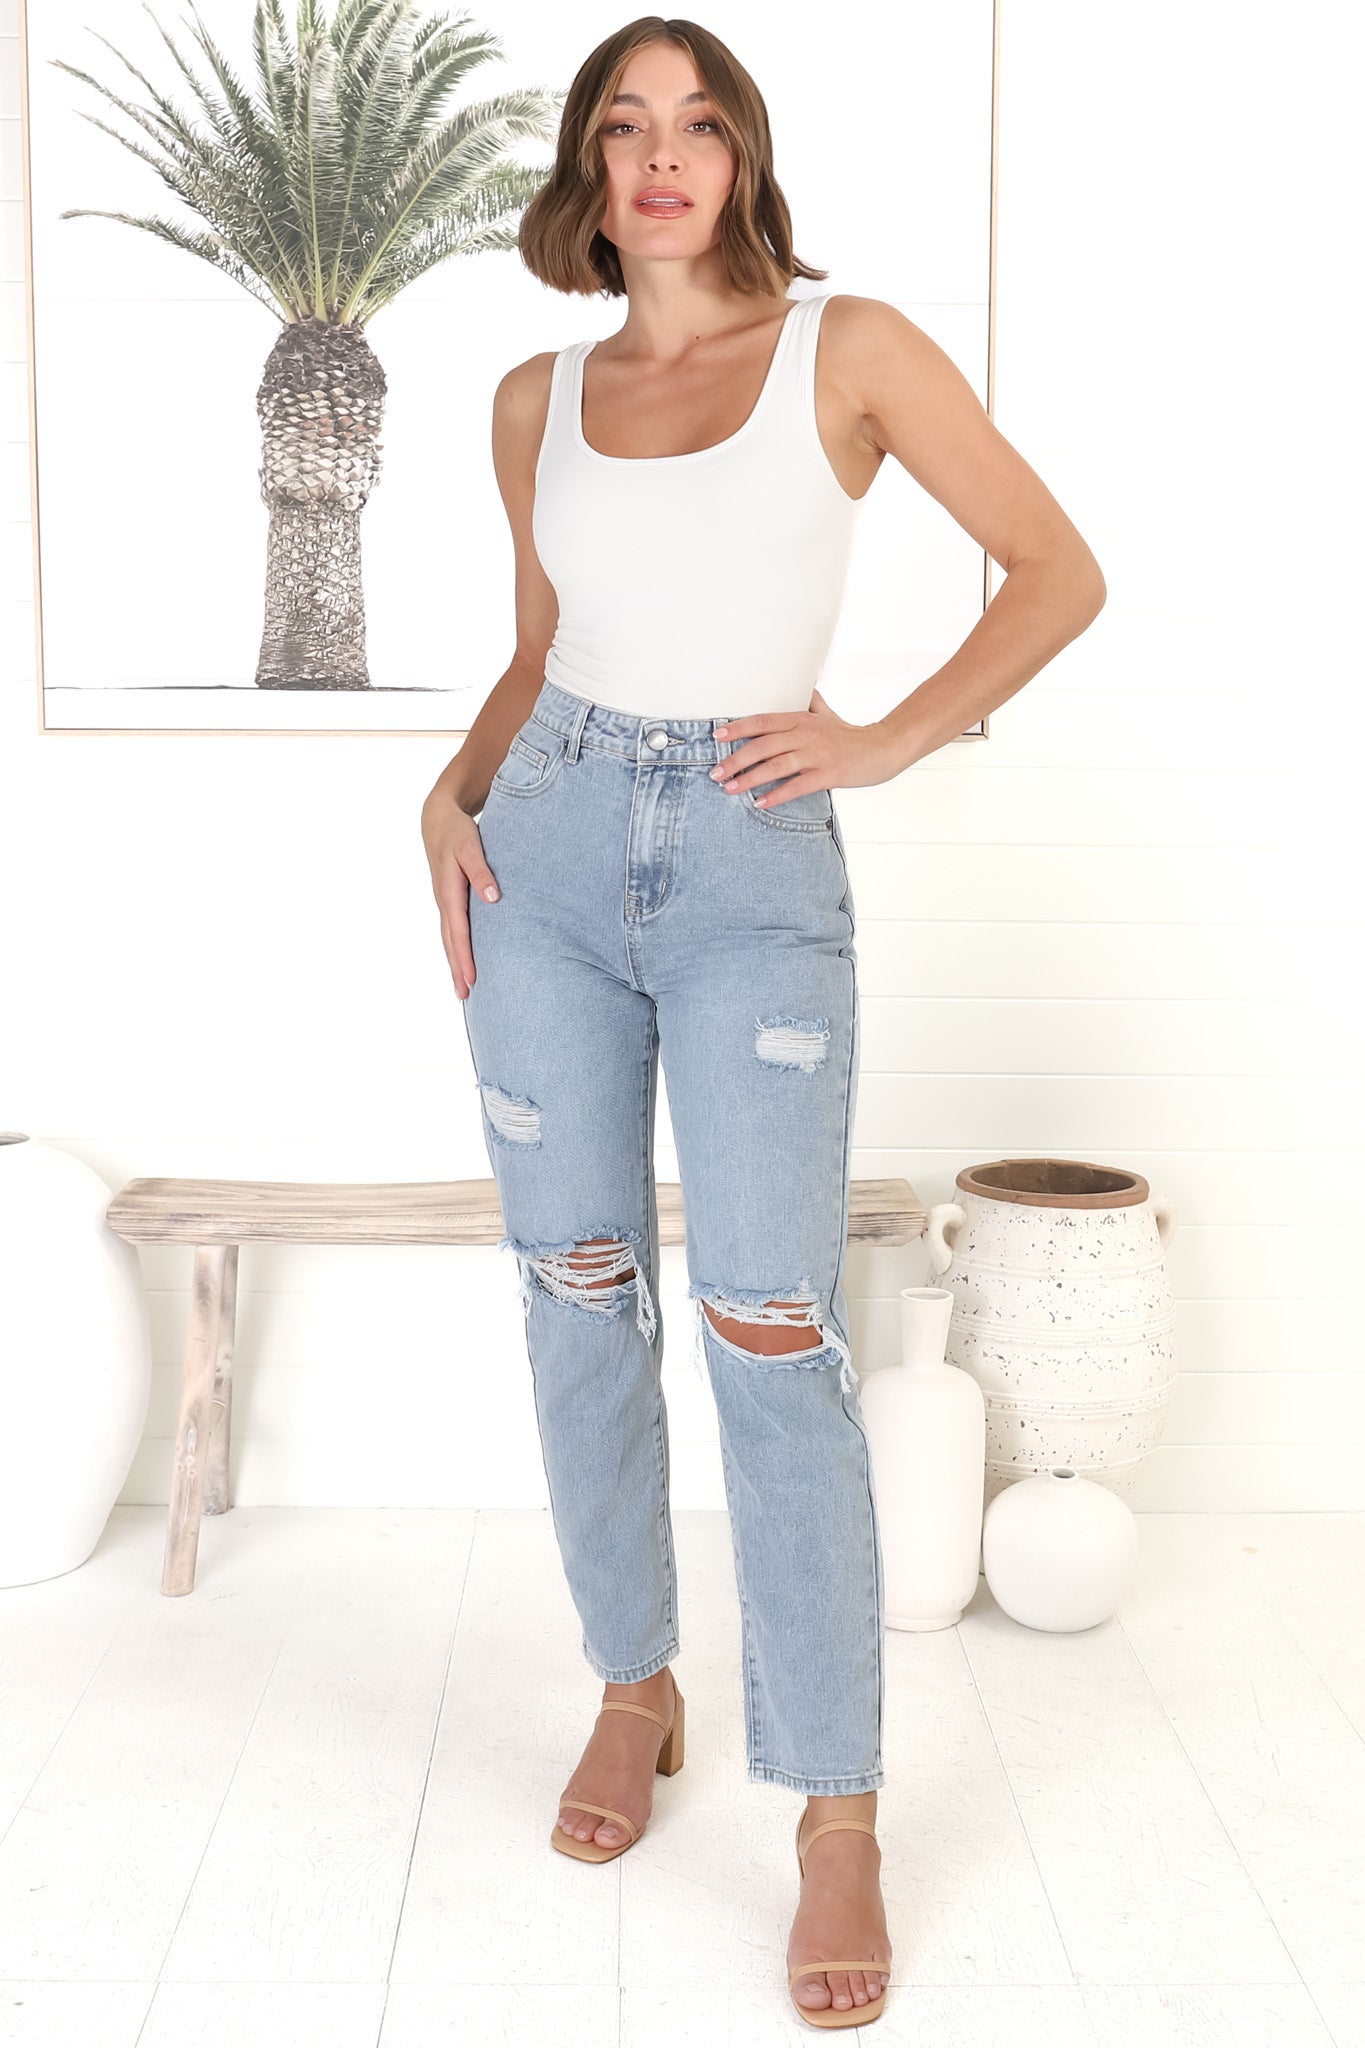 Amanda Boyfriend Jeans - High Waisted Distressed Ripped Knee Boyfriend Jeans in Light Denim